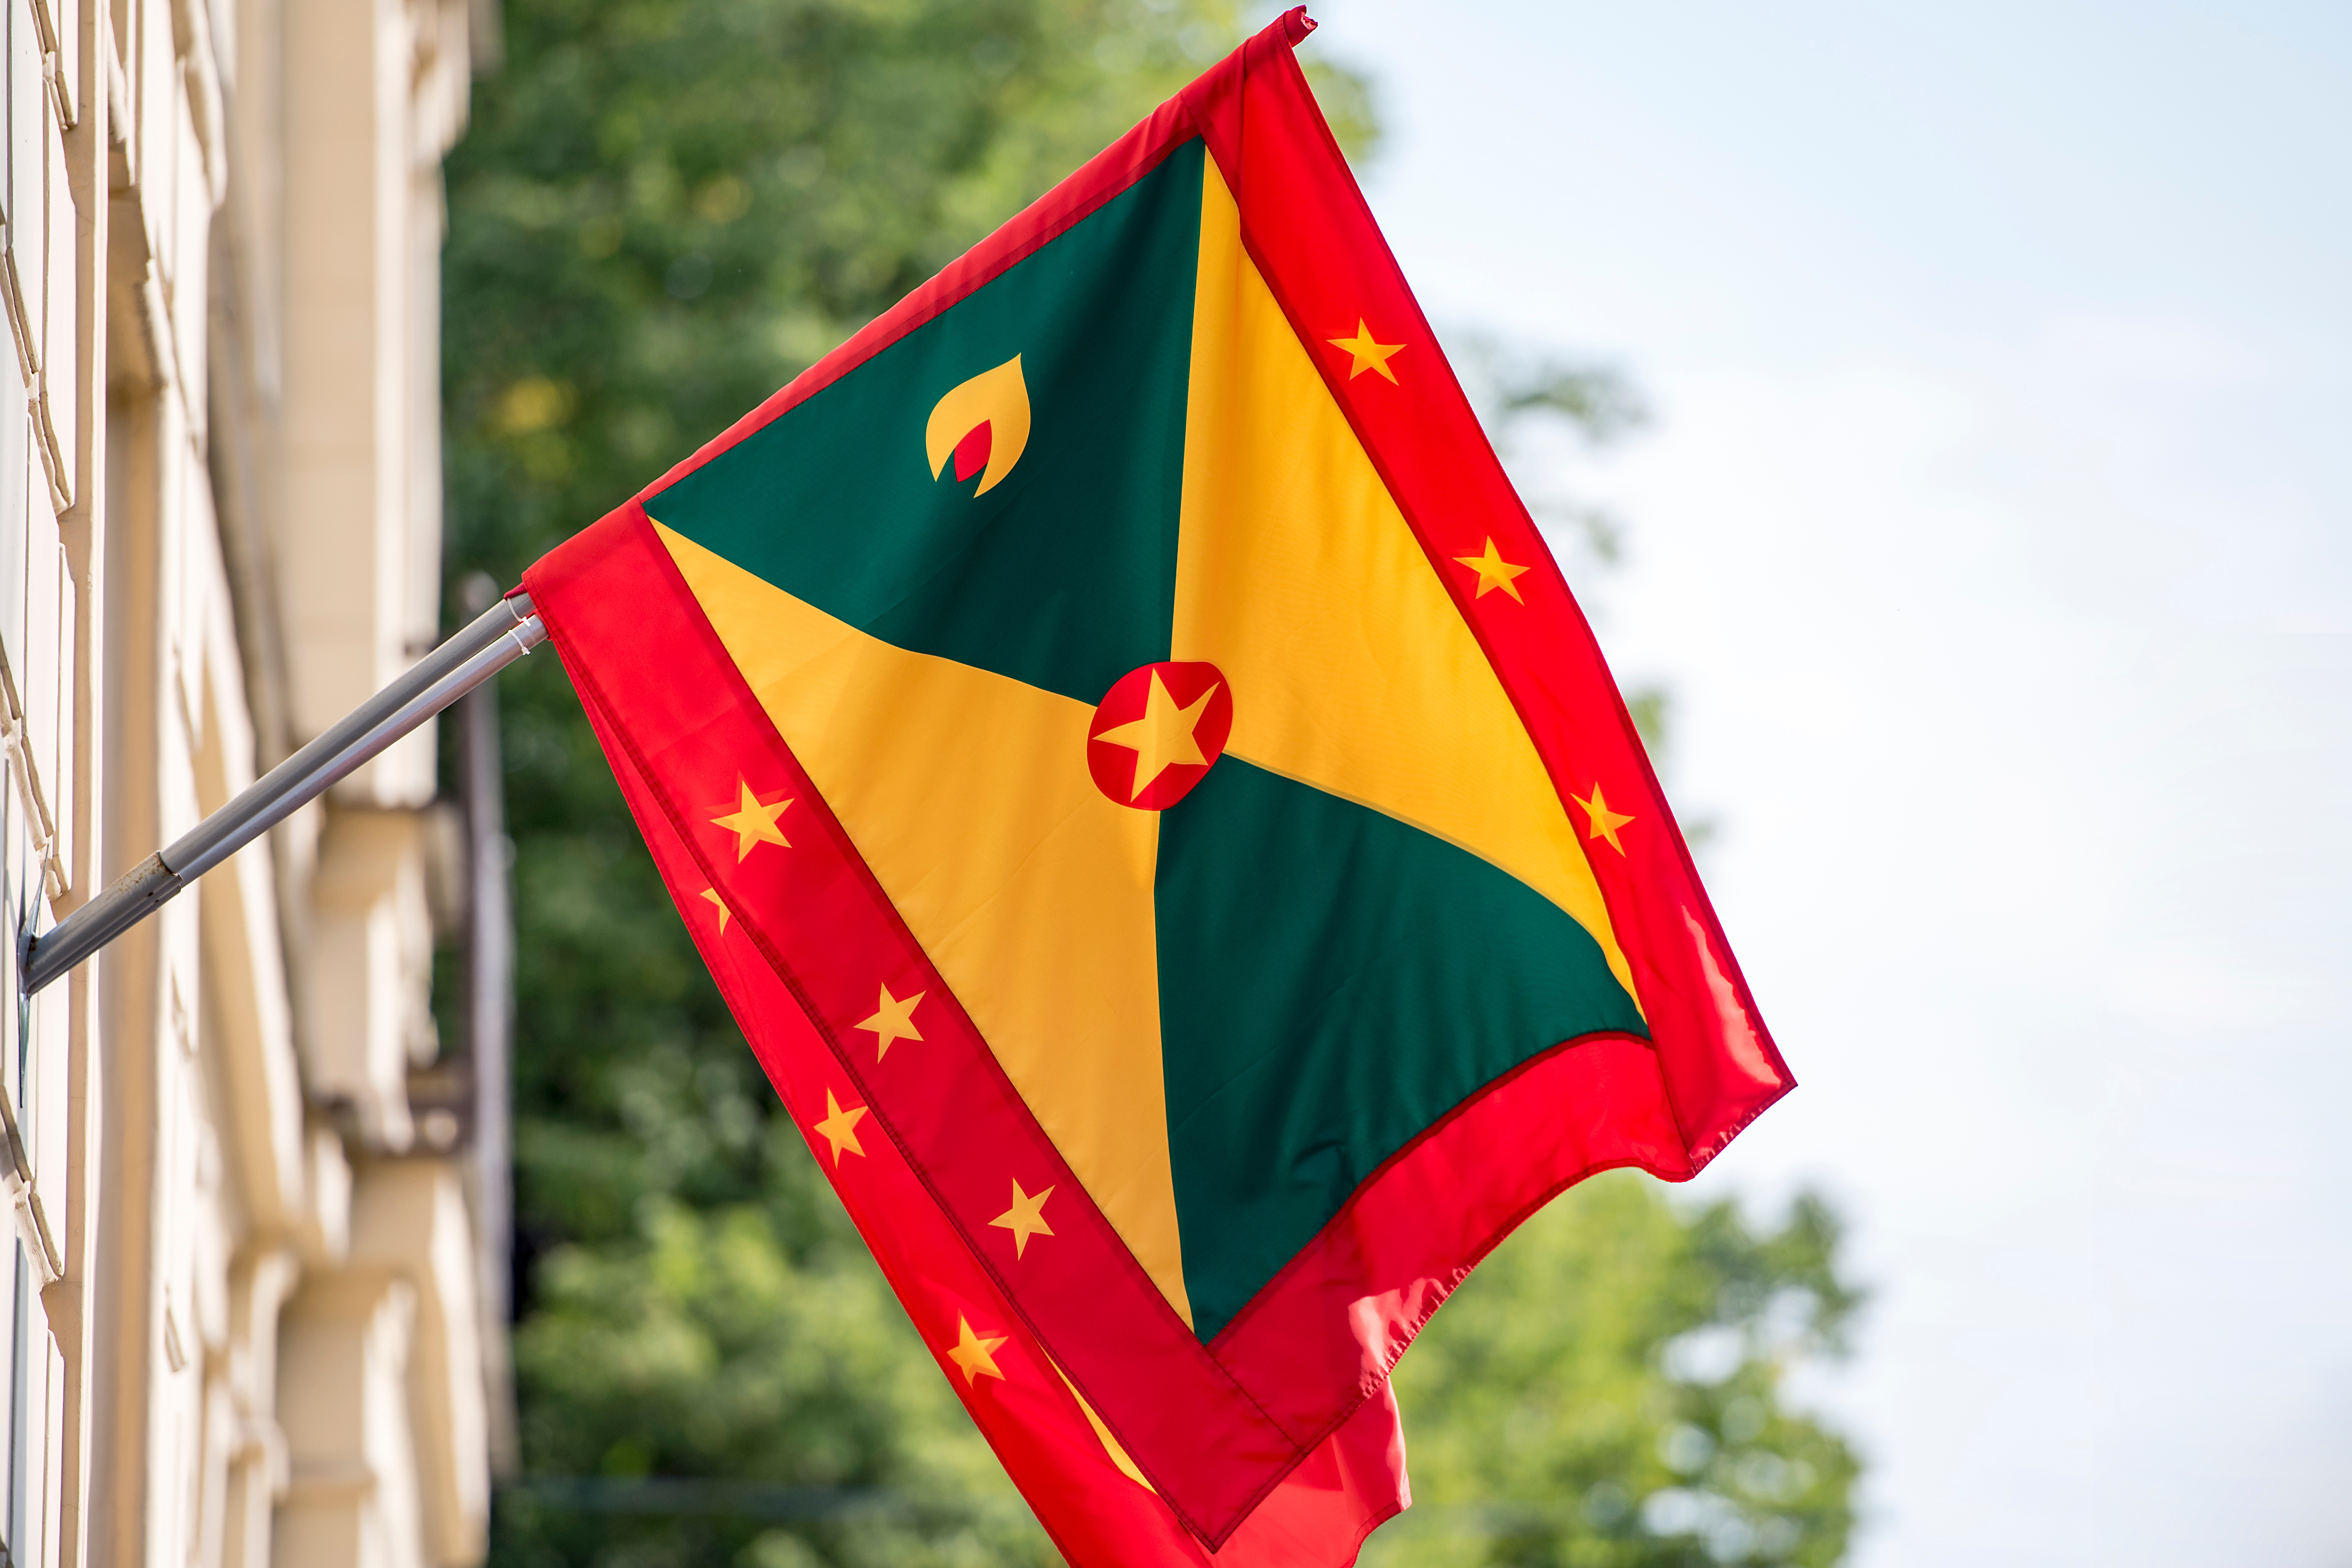 The flag symbolizes the citizenship of Grenada